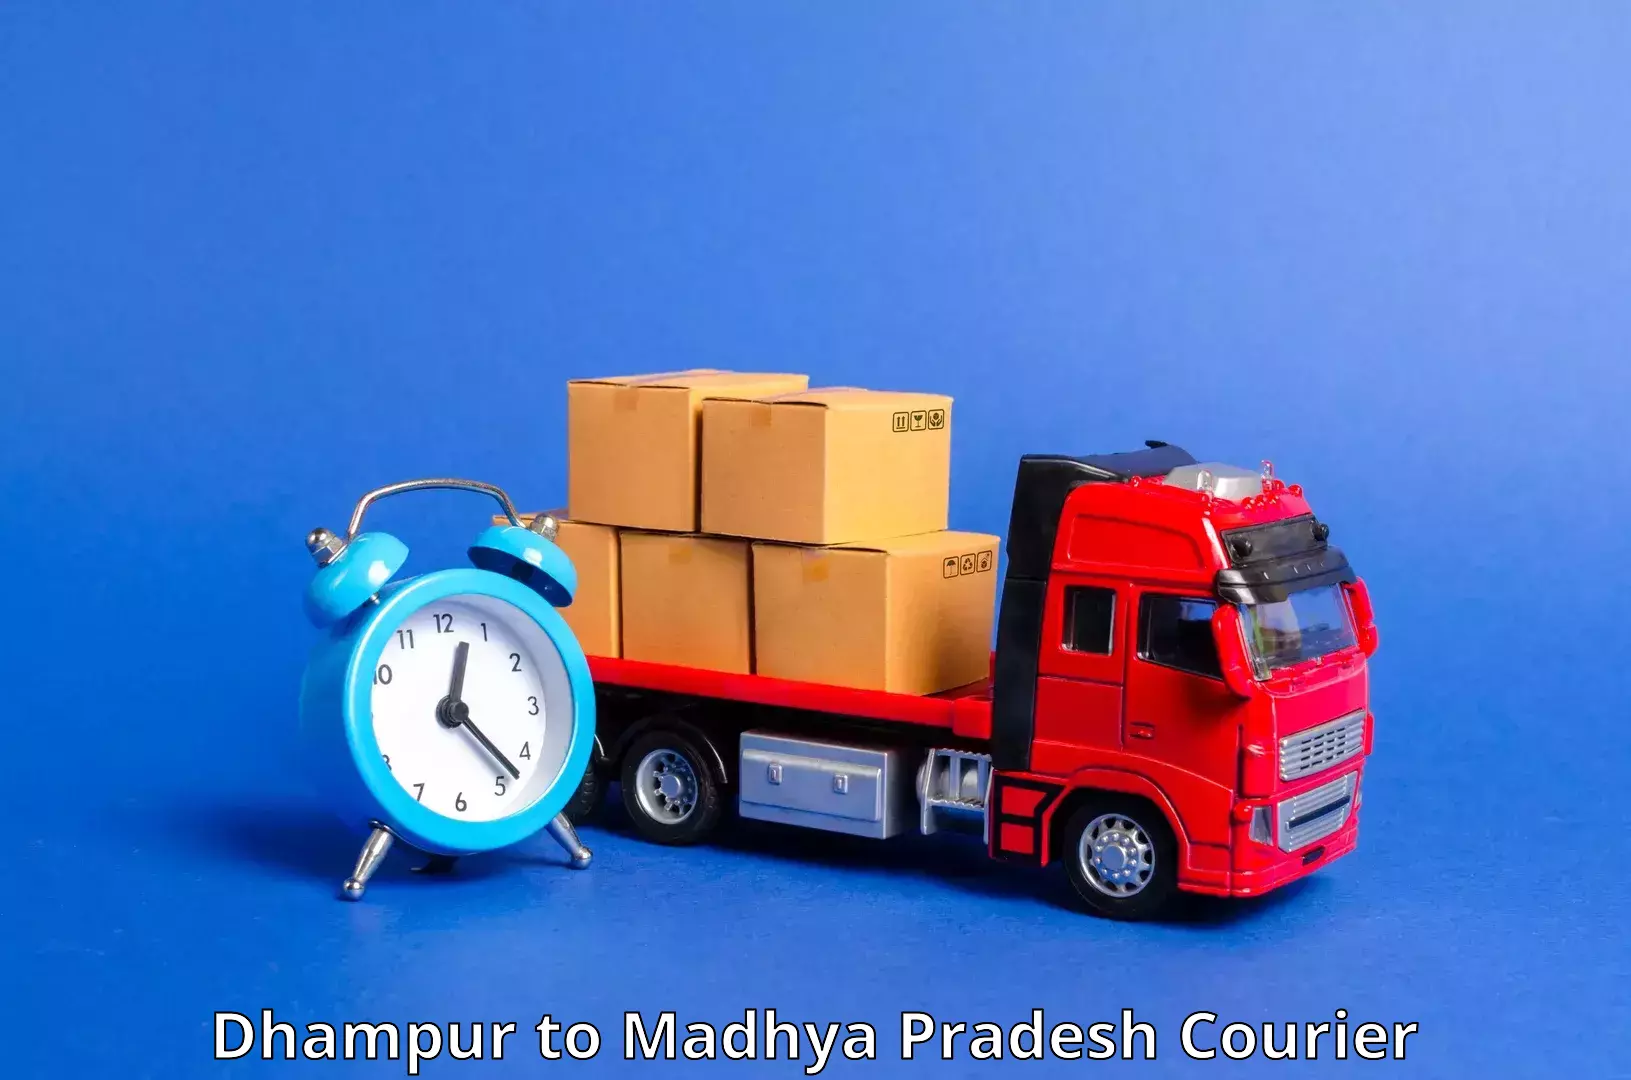 Courier service comparison Dhampur to Rehli